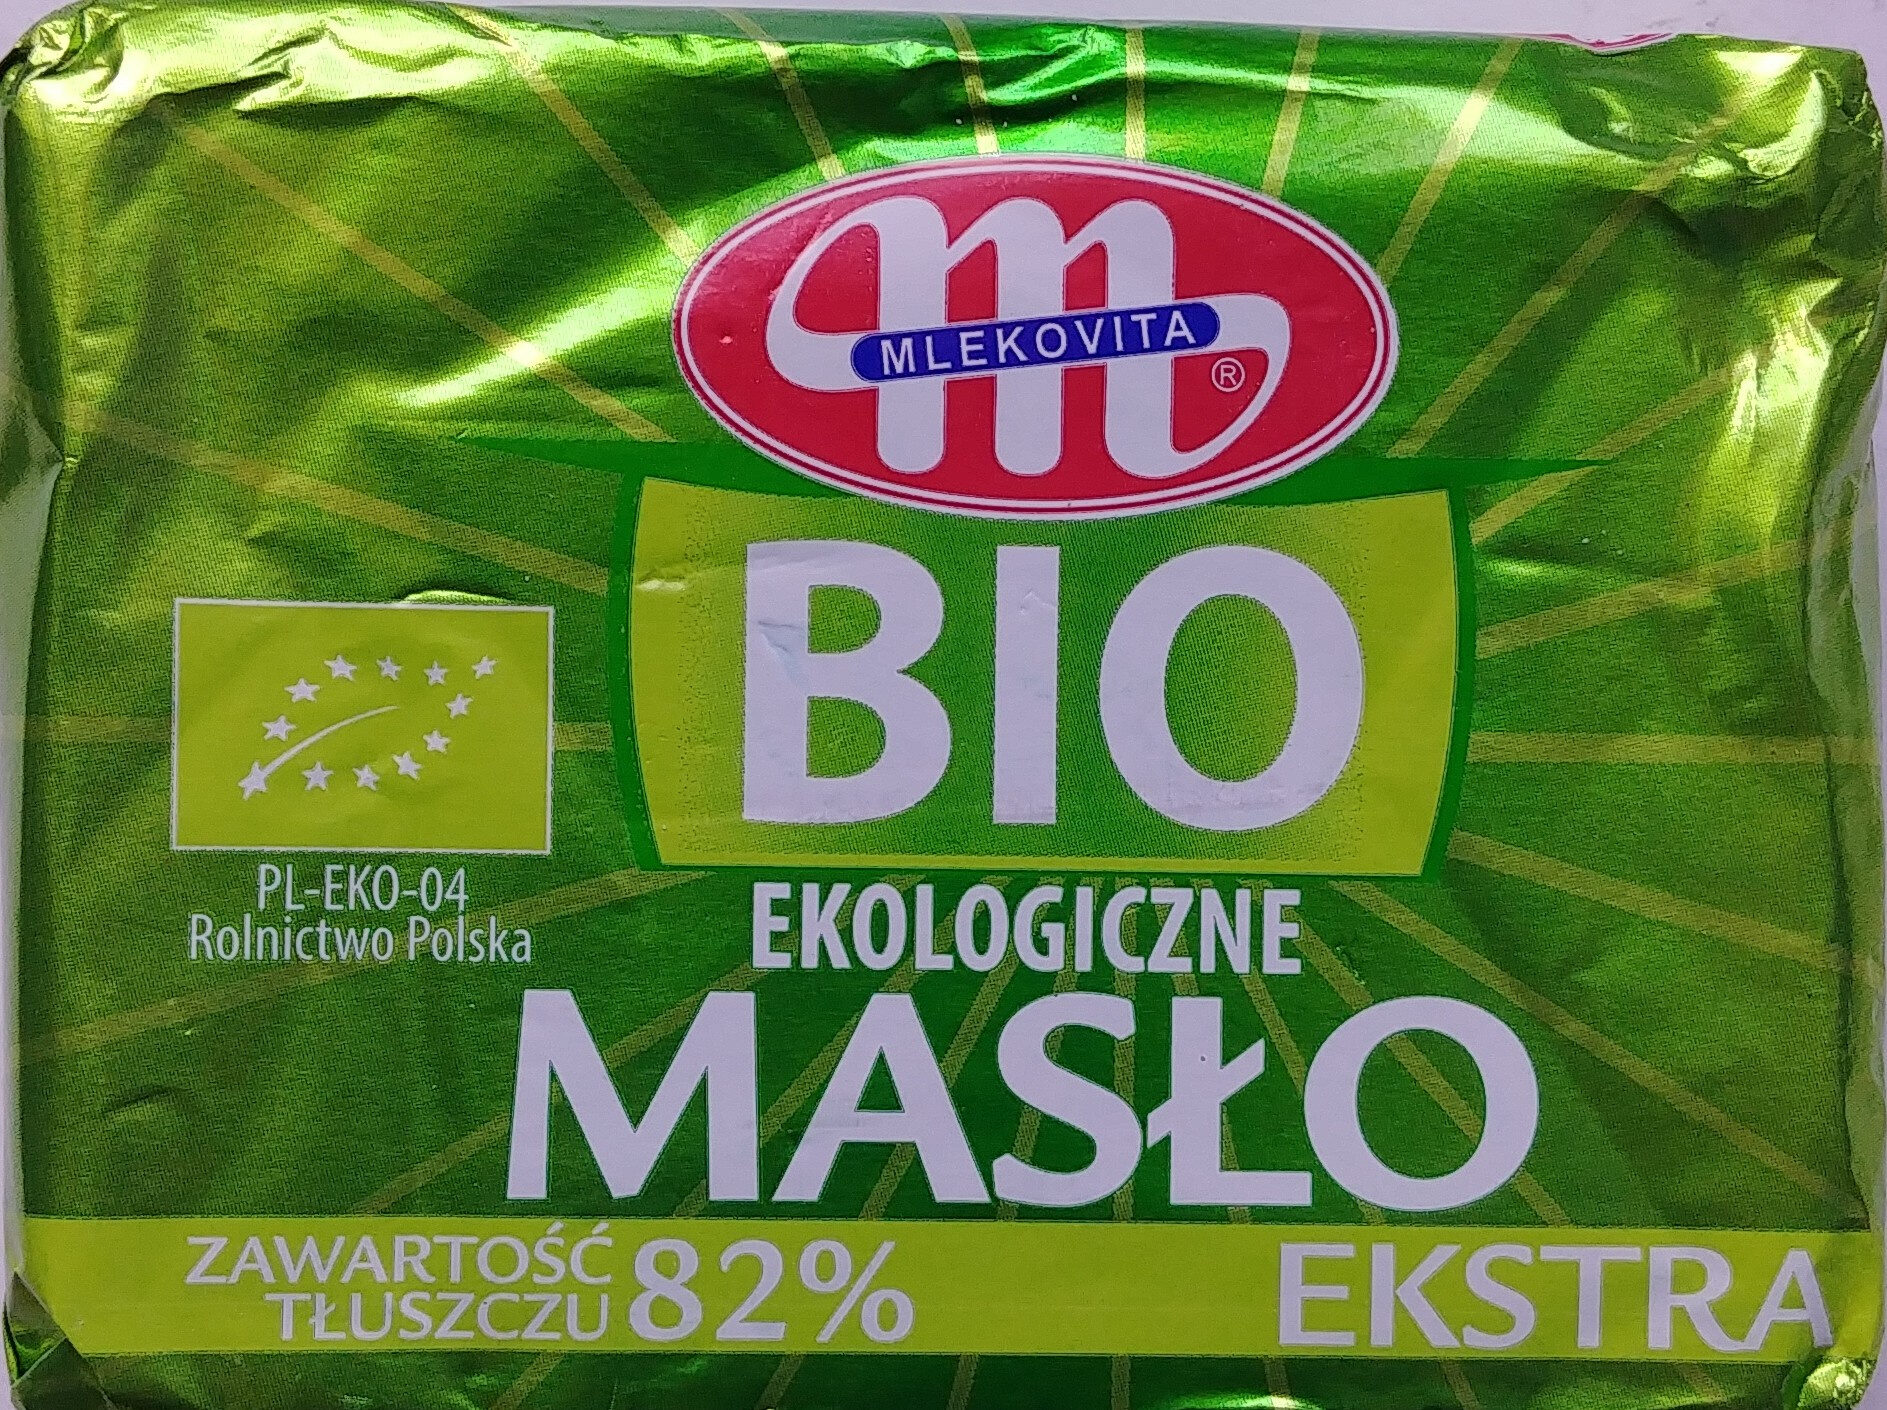 Masło ekstraekologiczne BIO - Product - pl